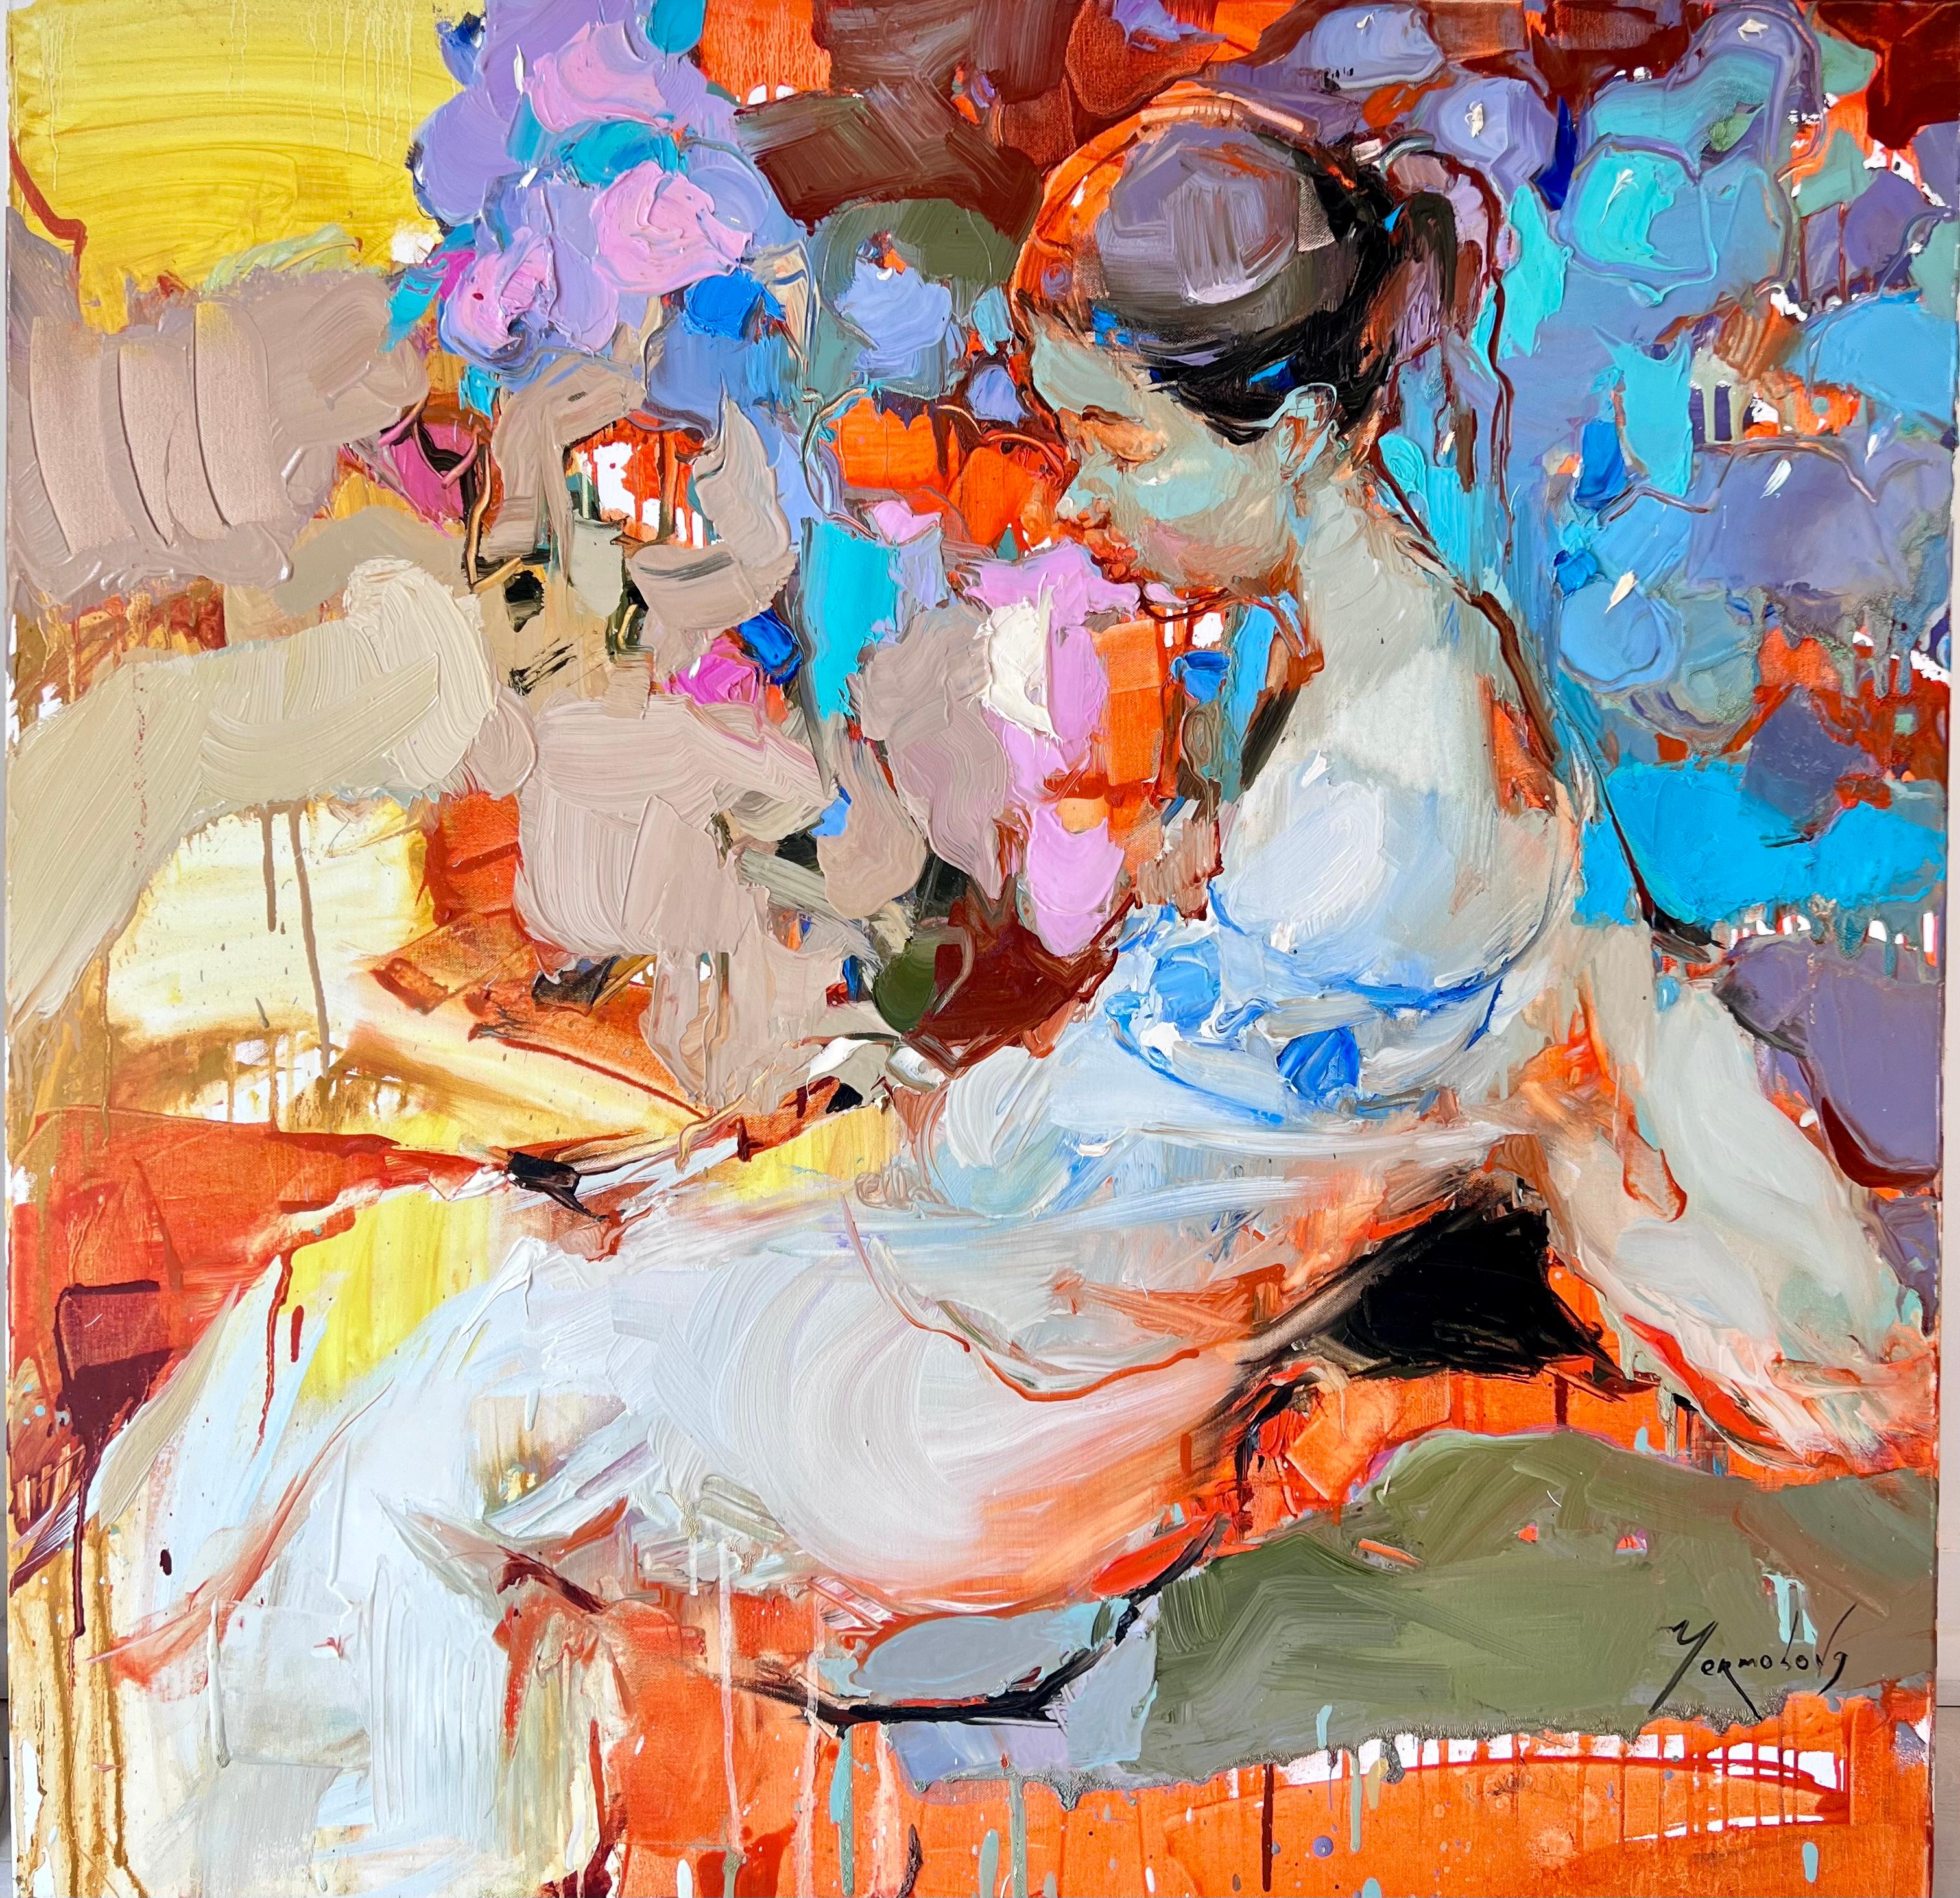 Flower Intrigue-original impressionism figurative oil painting-contemporary Art